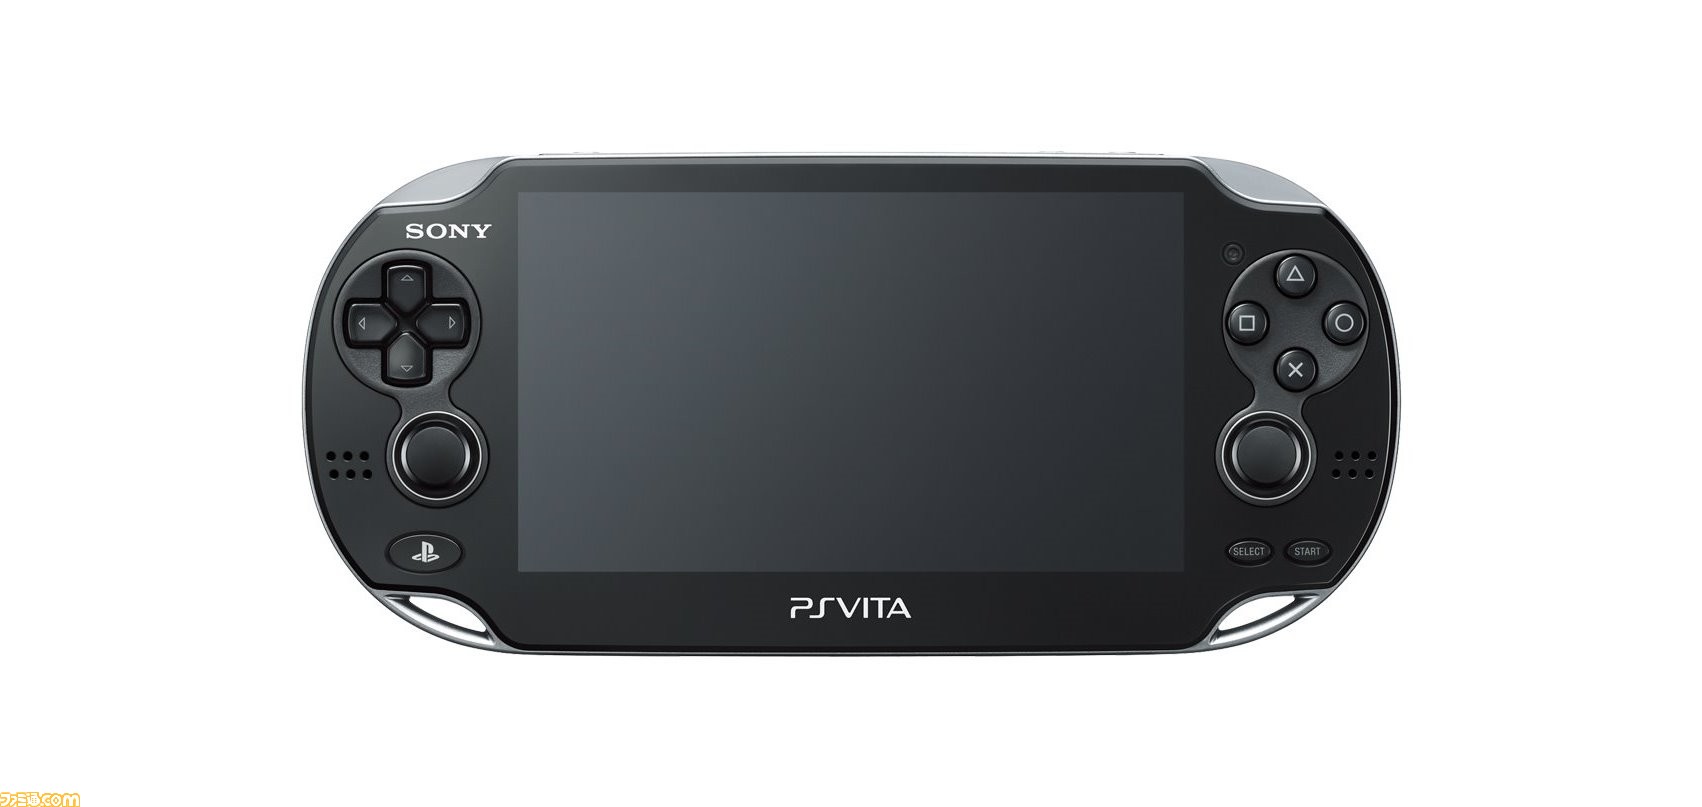 PS Vitaが発売された日。有機ELディスプレイや3G回線、加速度